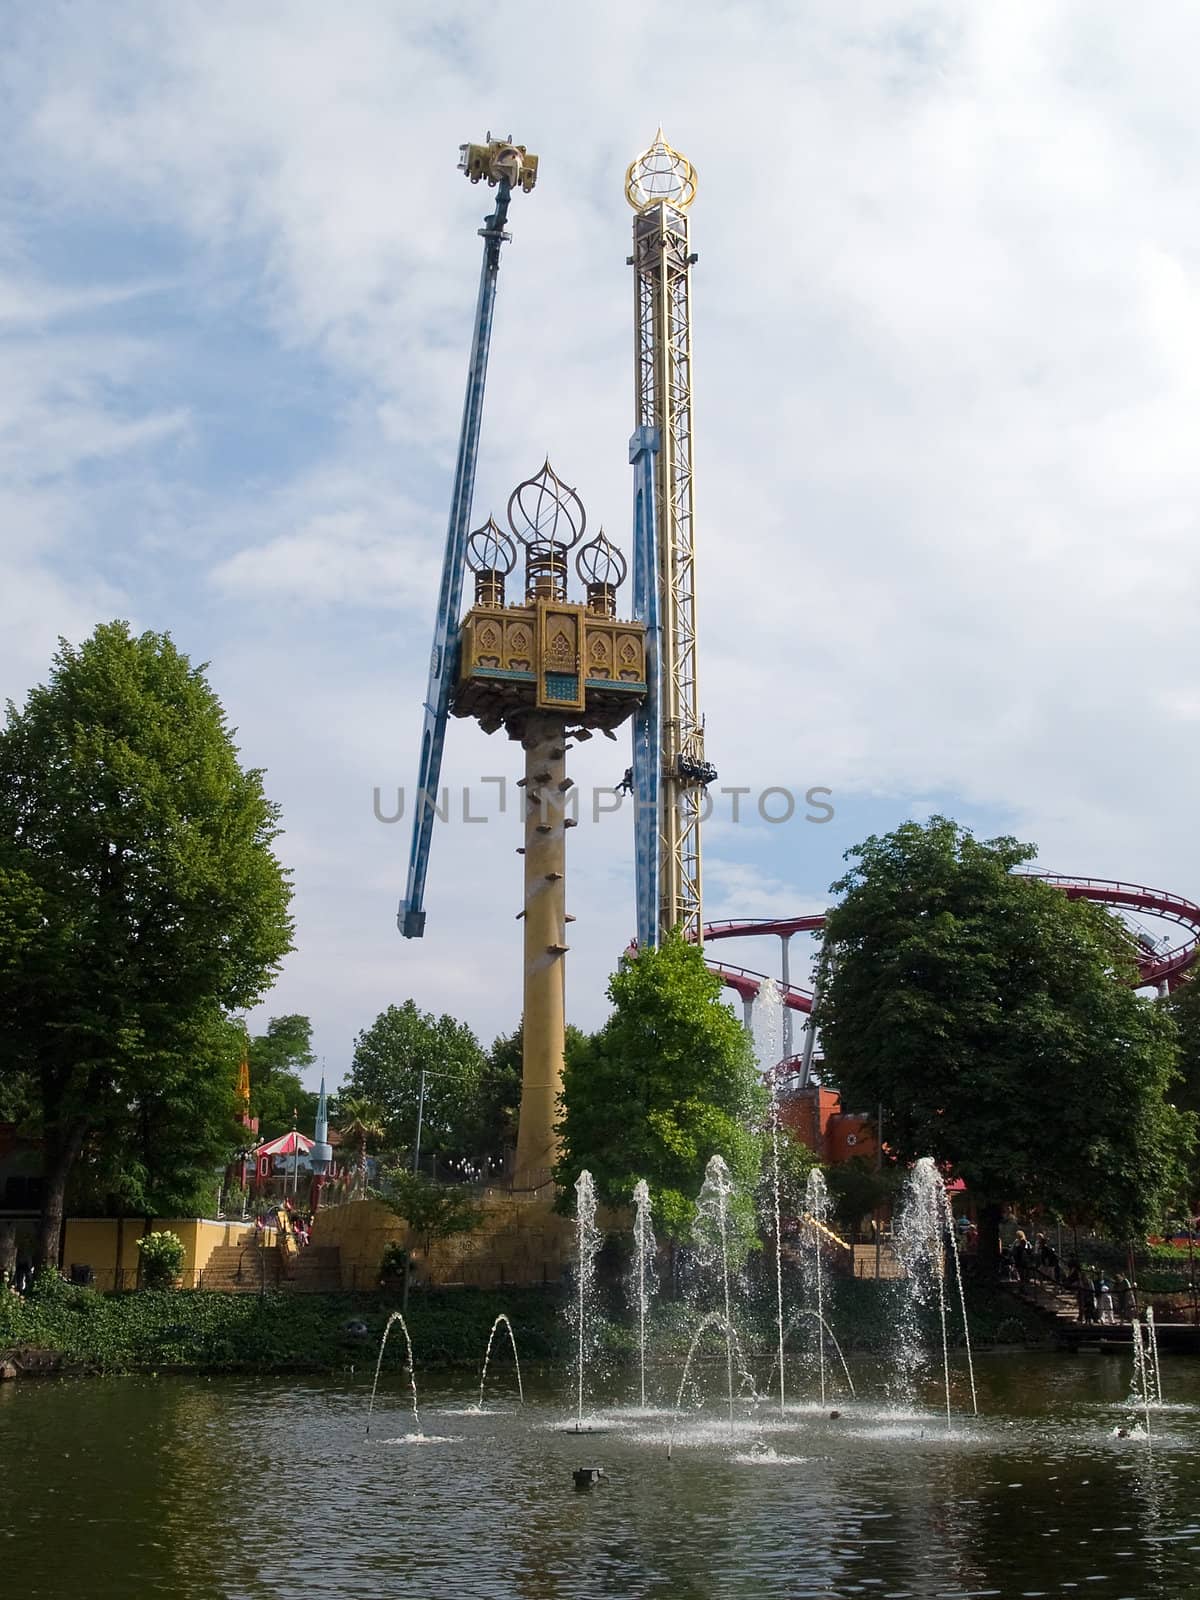 Free fall tower ride in Tivoli Gardens amusement park Copenhagen Denmark